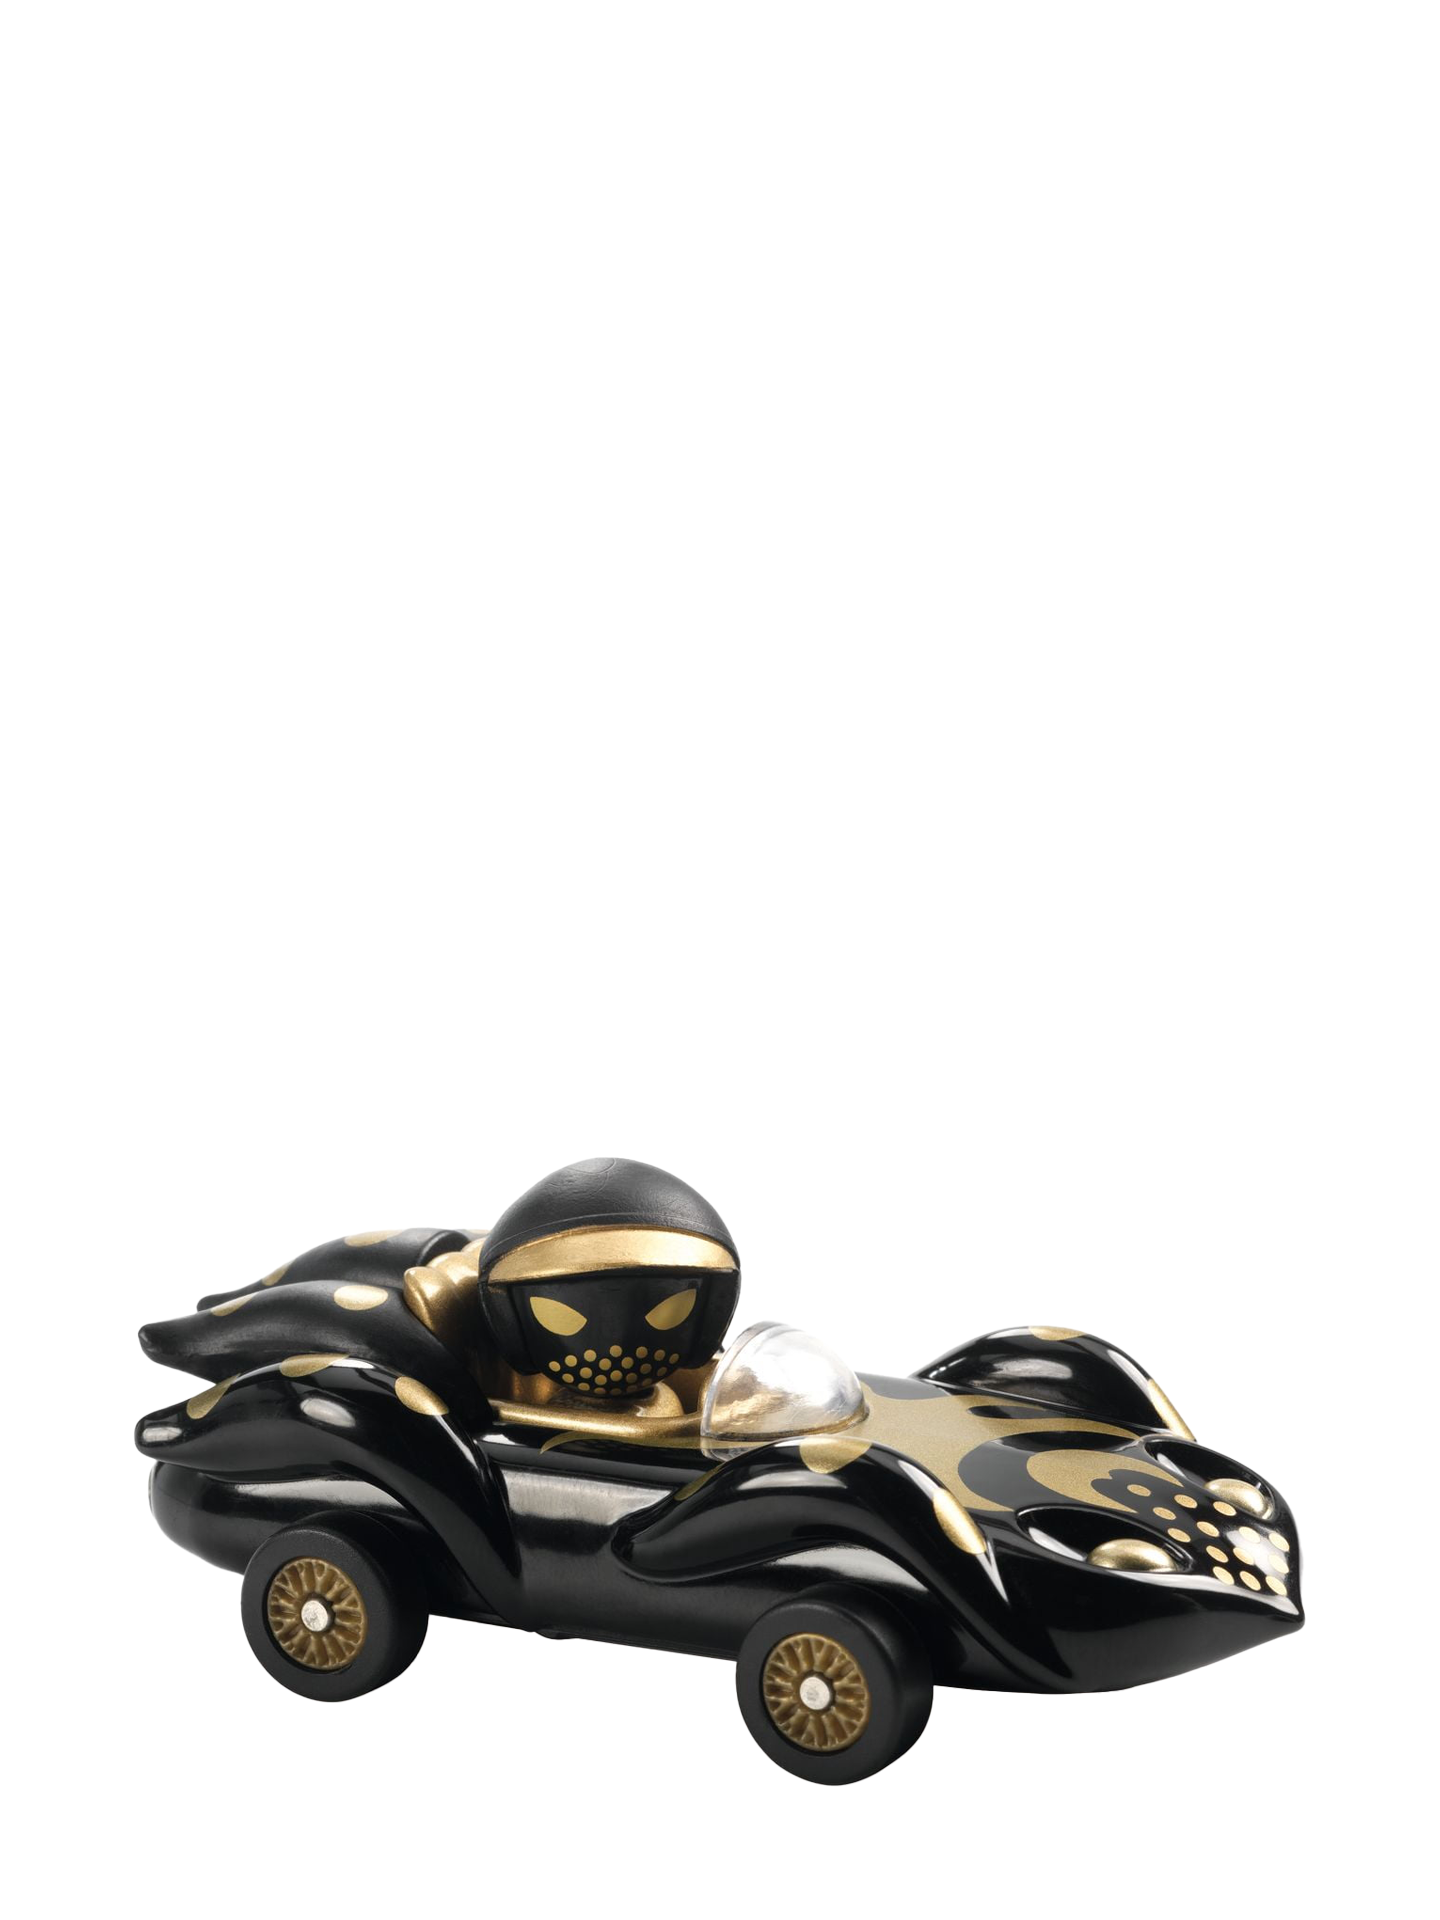 Fangio Octo Race Car (Crazy motors collection)